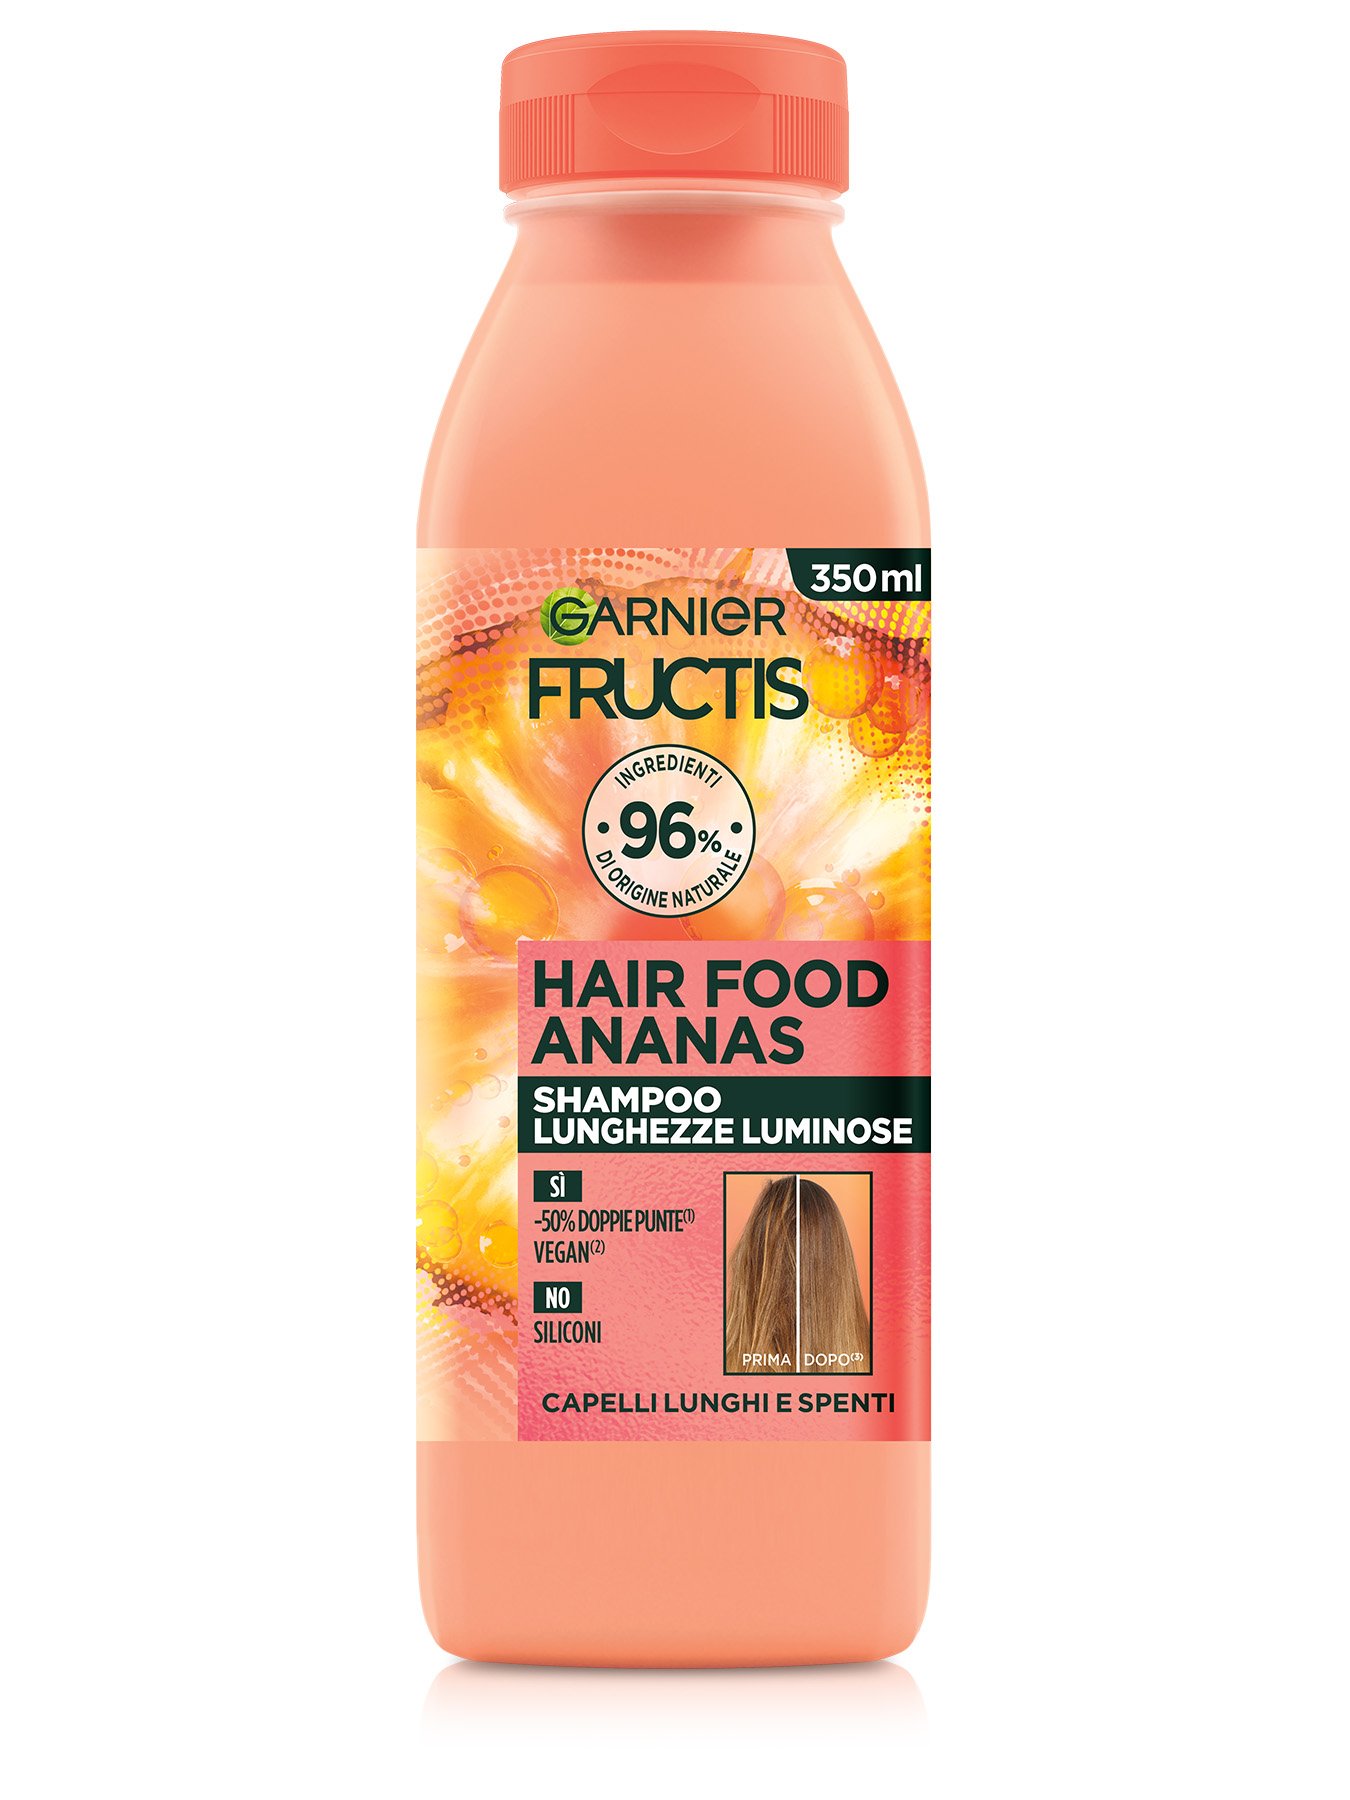 Fructis Hair Food Ananas Shampoo